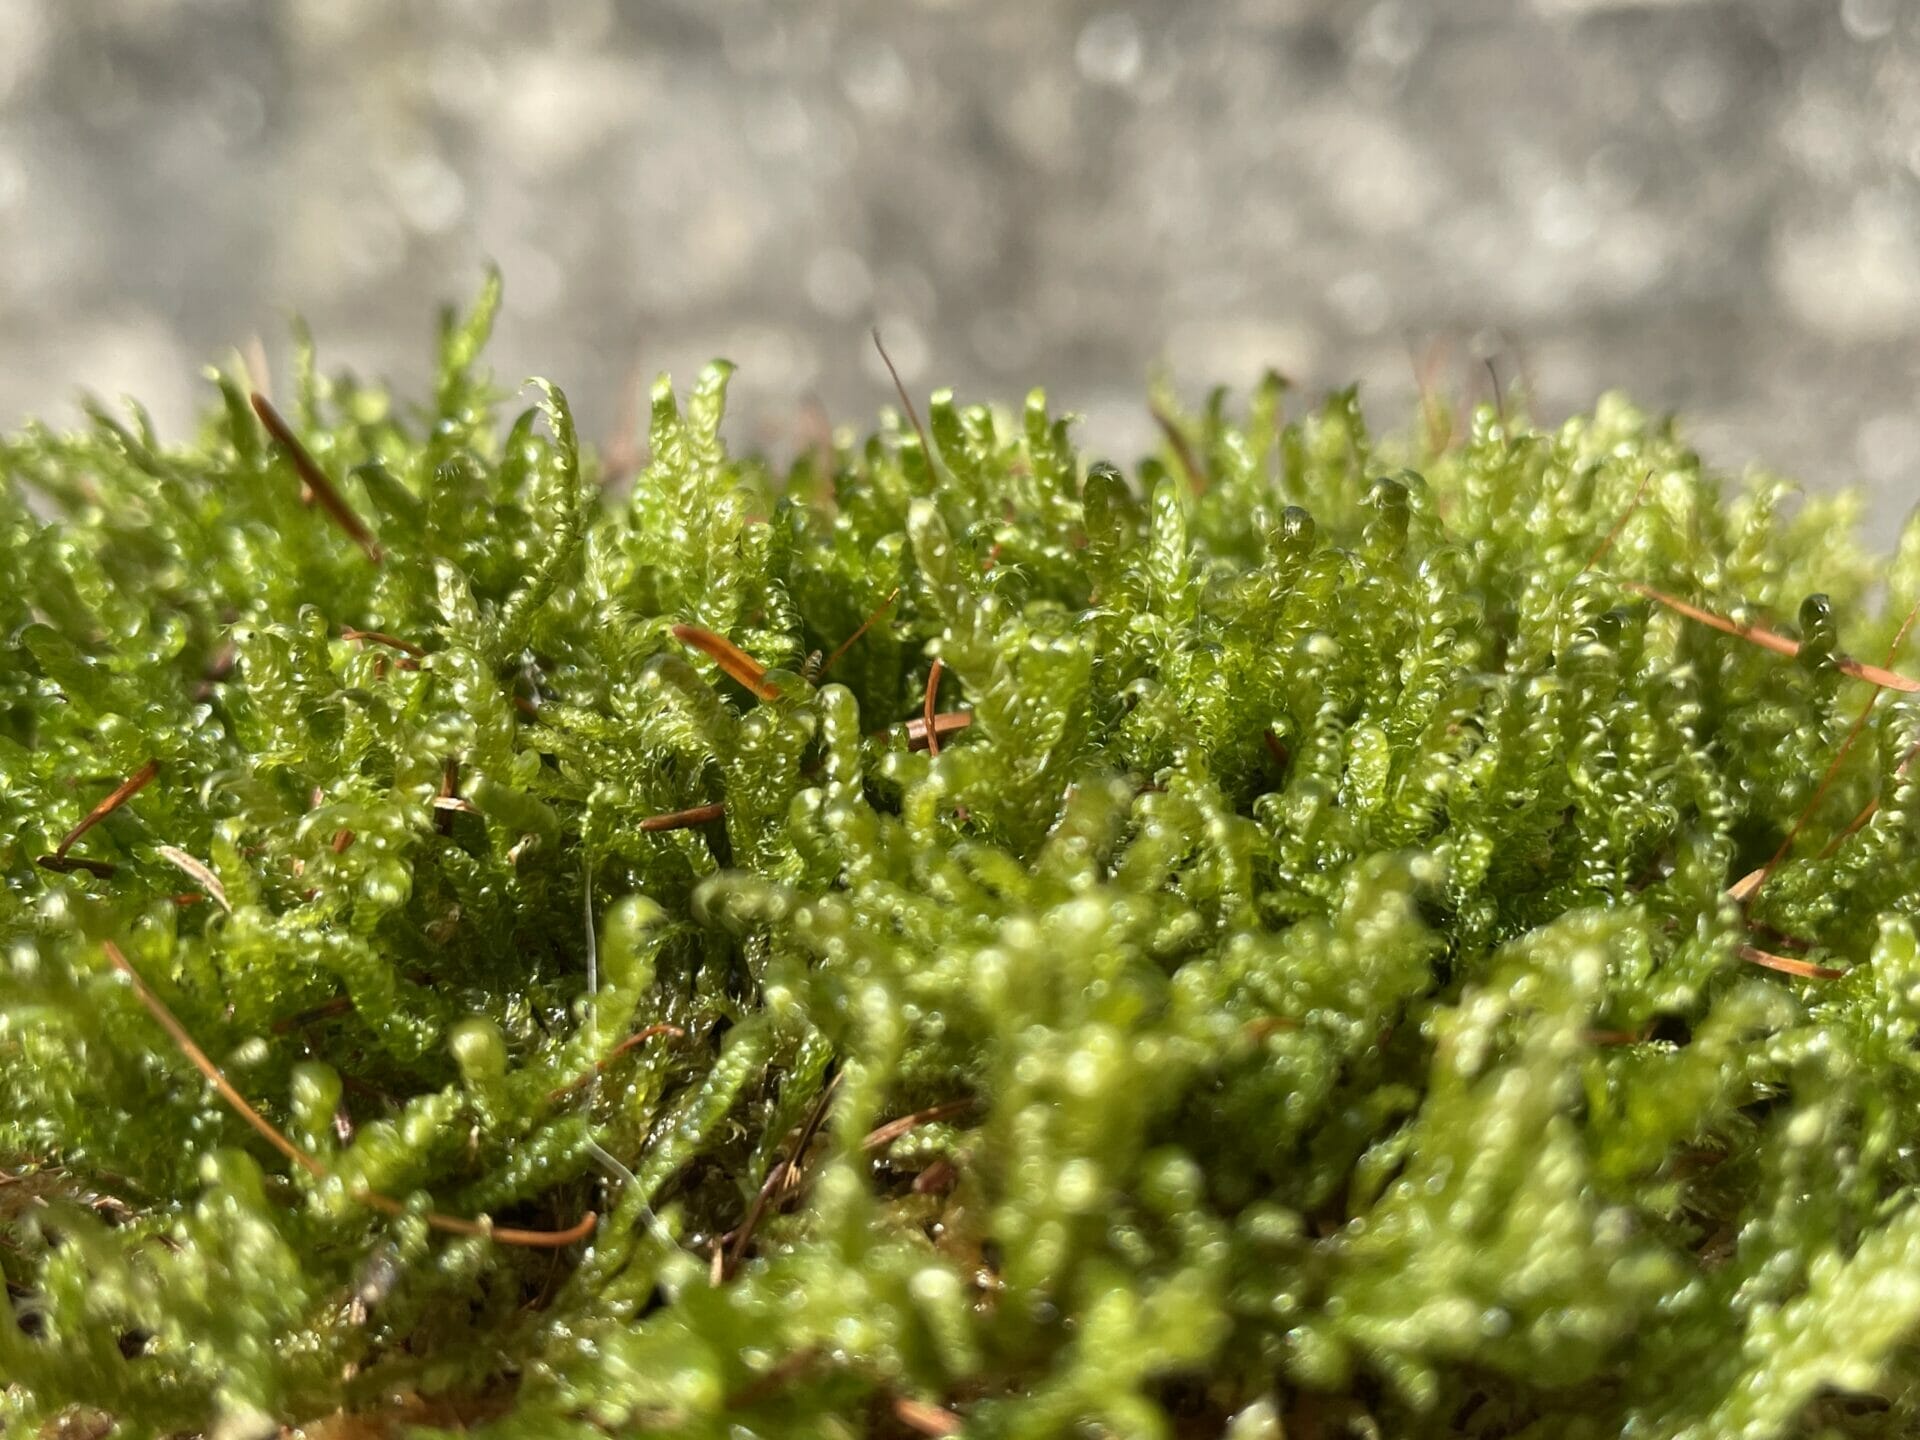 Why choose living moss?